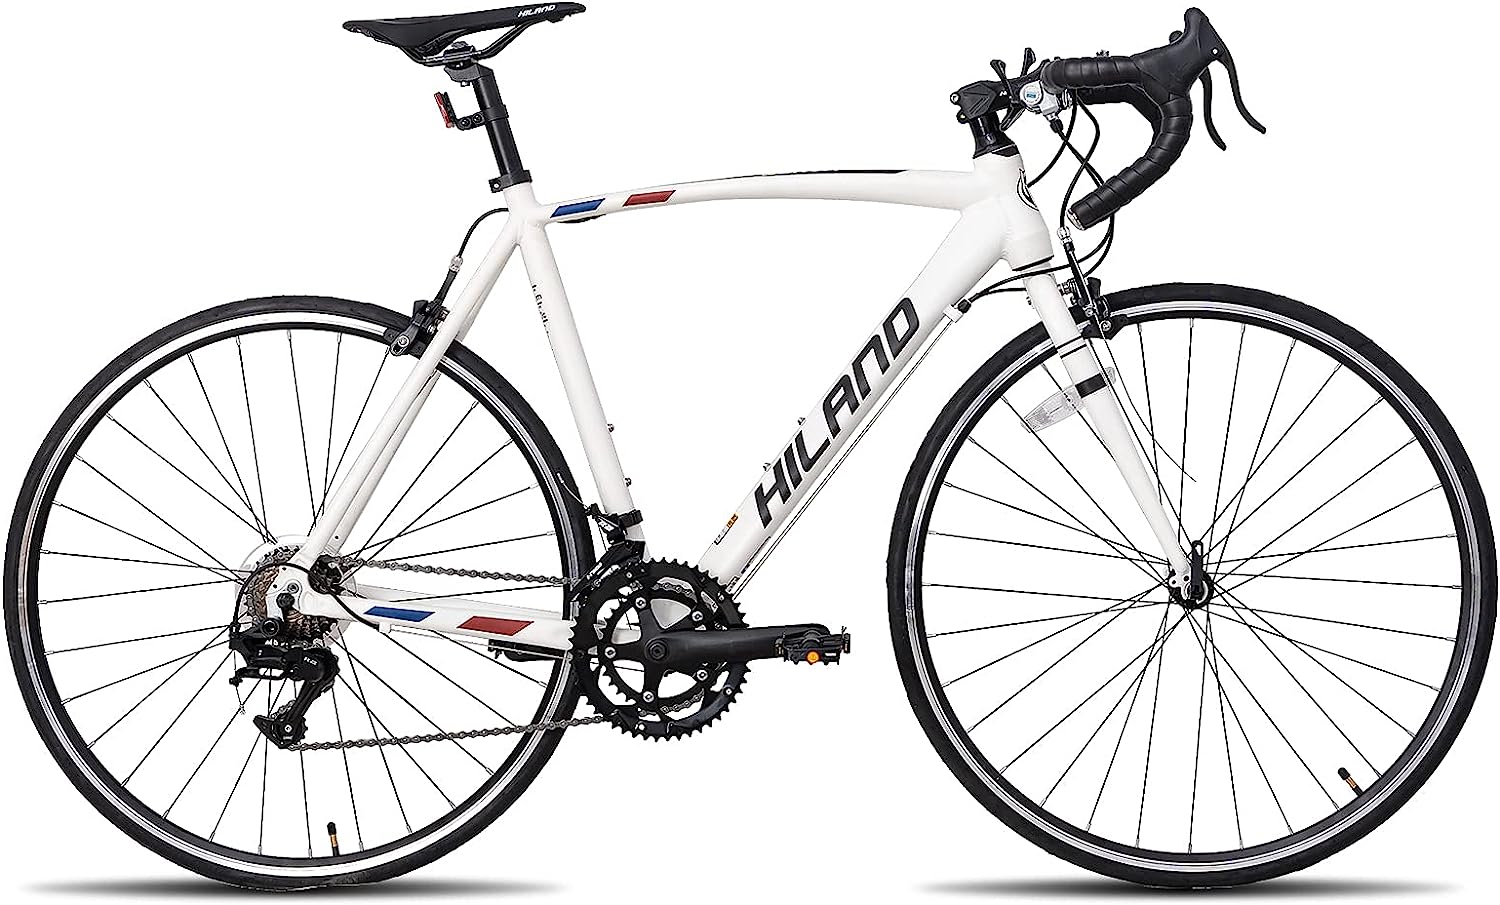 Hiland Road Bike,Shimano 14 Speeds,Light Weight Aluminum Frame,700C Racing Bike for Men - image 2 of 8